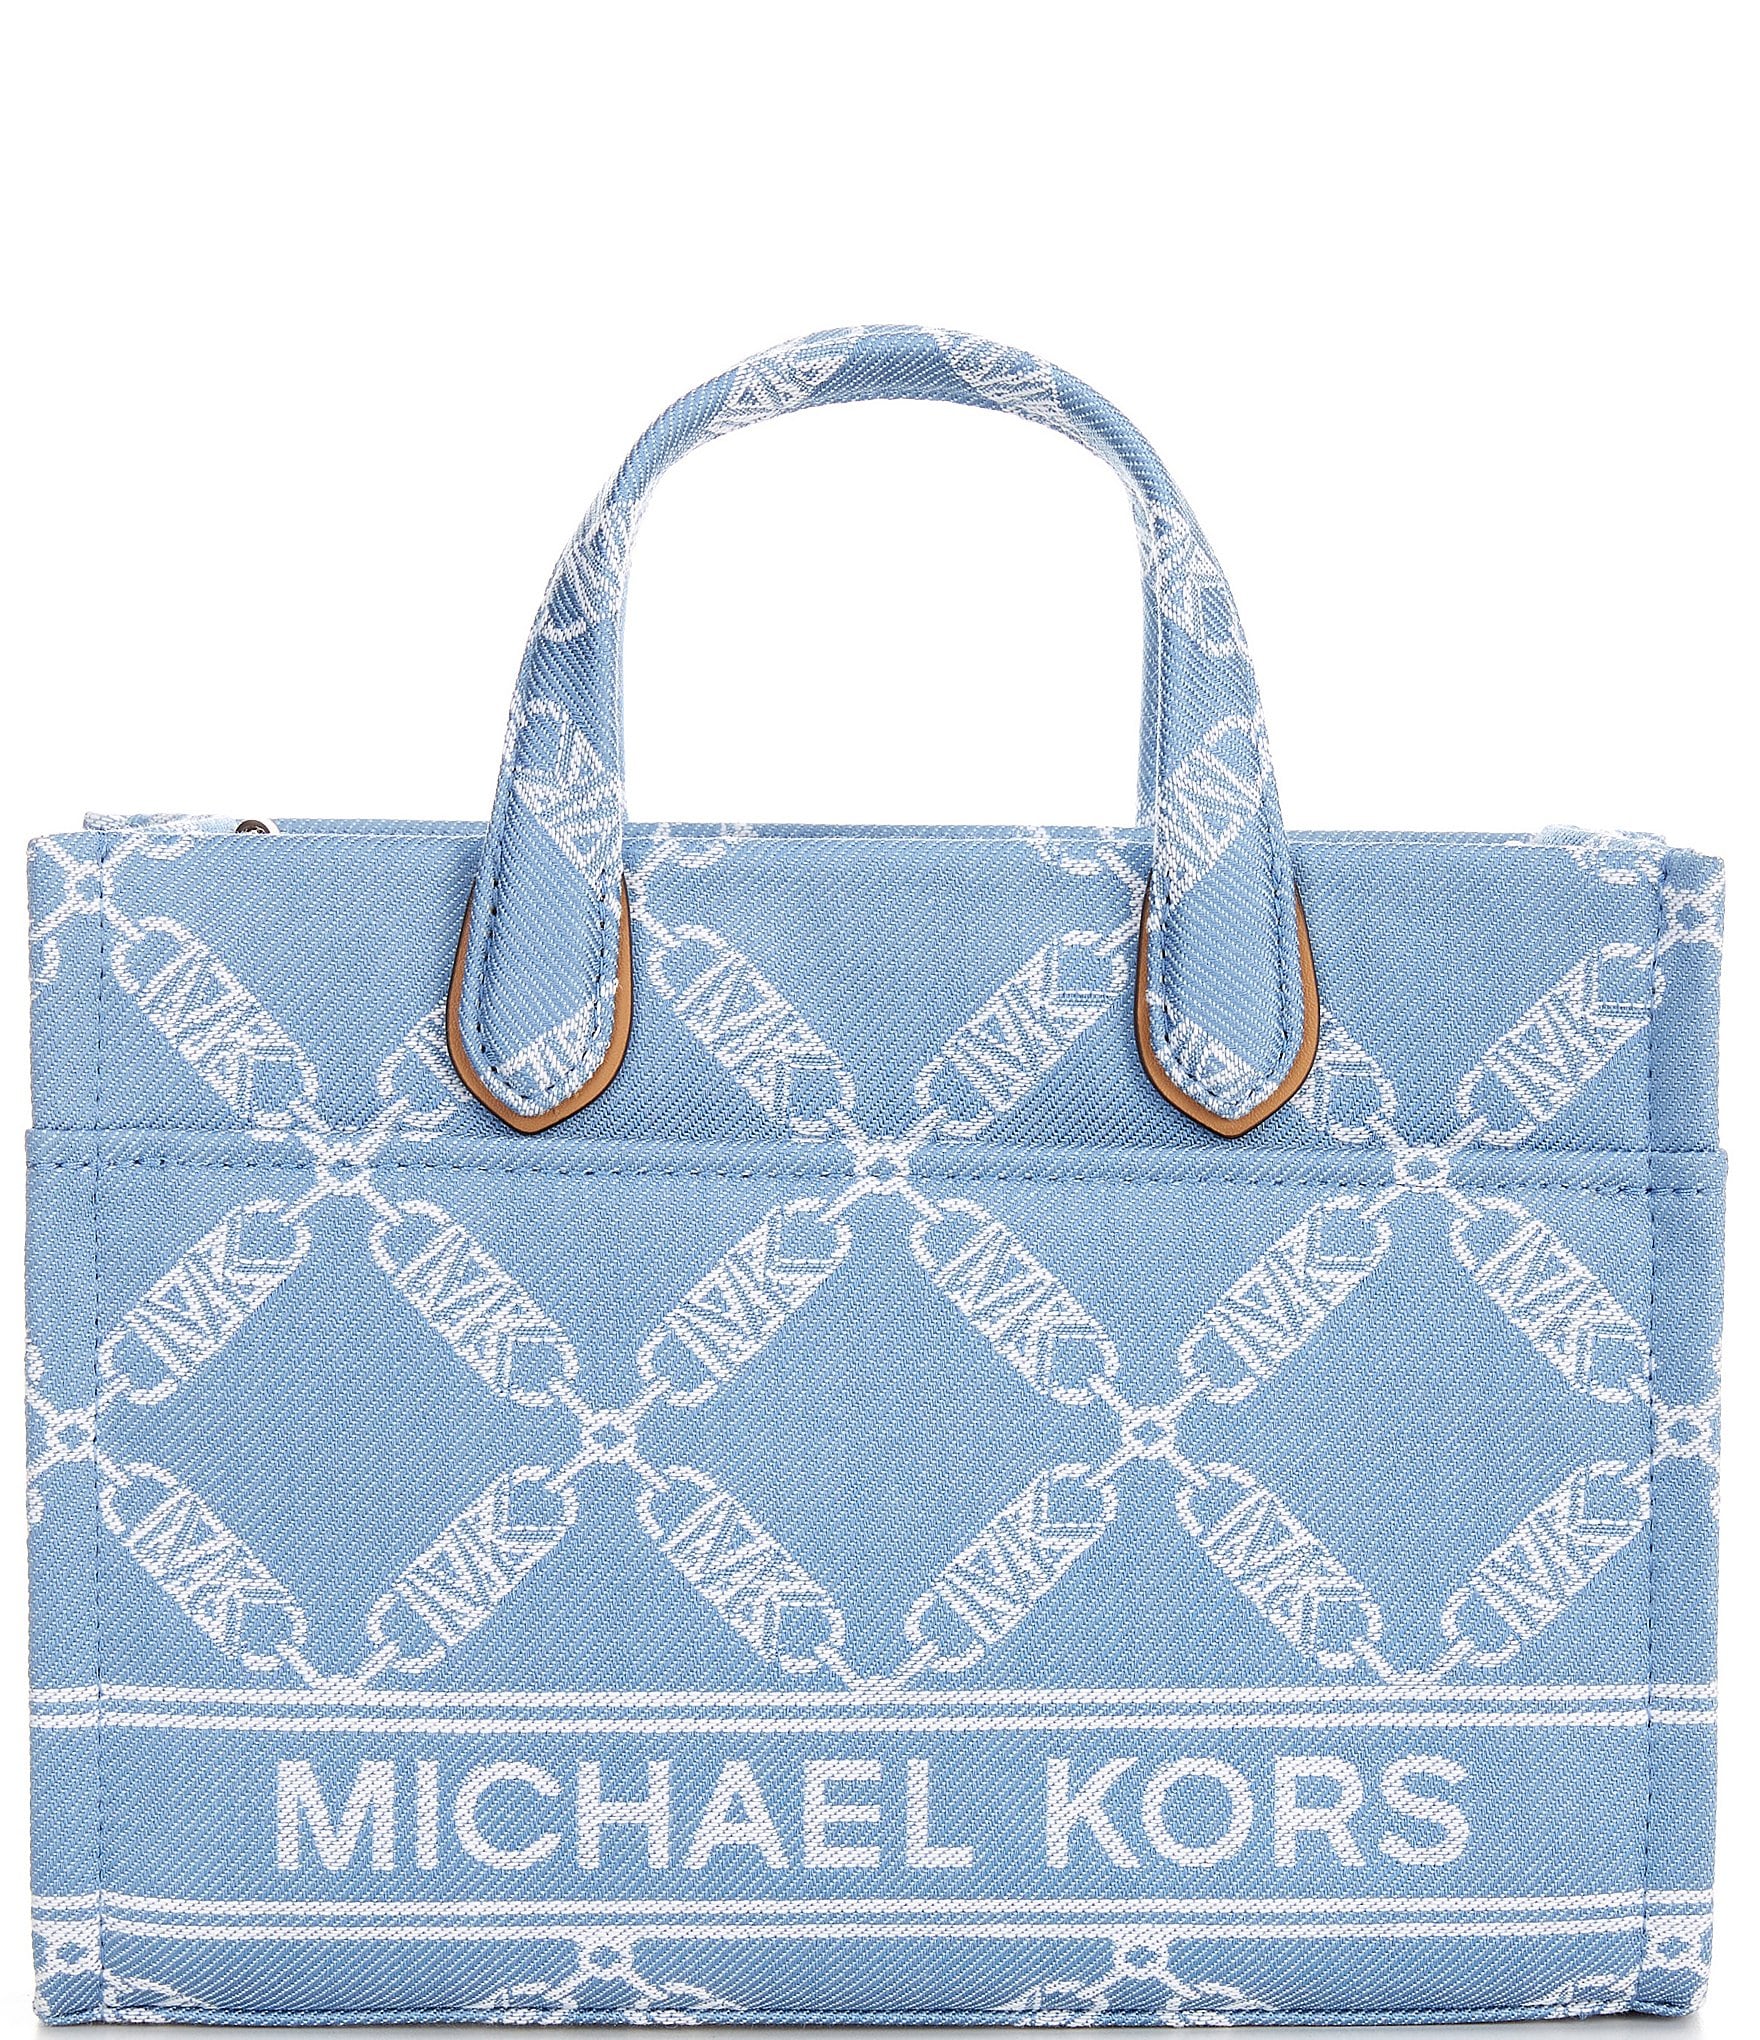 Michael Kors Sienna Large Convertible Shoulder Bag | Dillard's |  Convertible shoulder bags, Bags, Michael kors